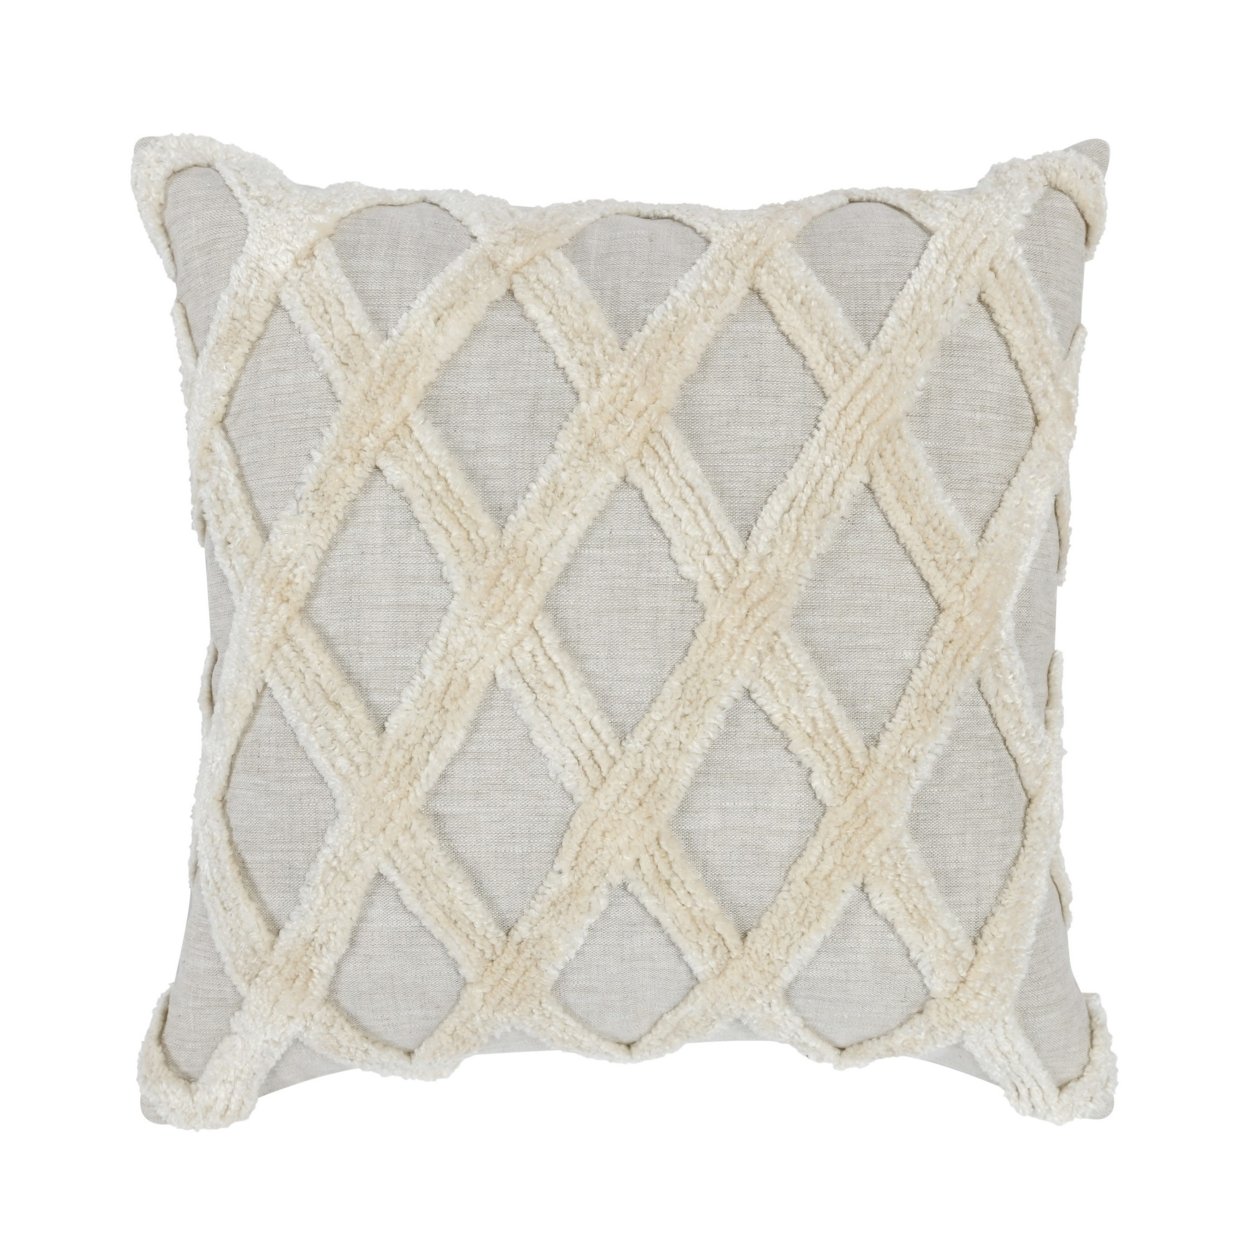 22 X 22 Modern Throw Pillow, Shag, Geometric Diamond, Ivory, Gray- Saltoro Sherpi